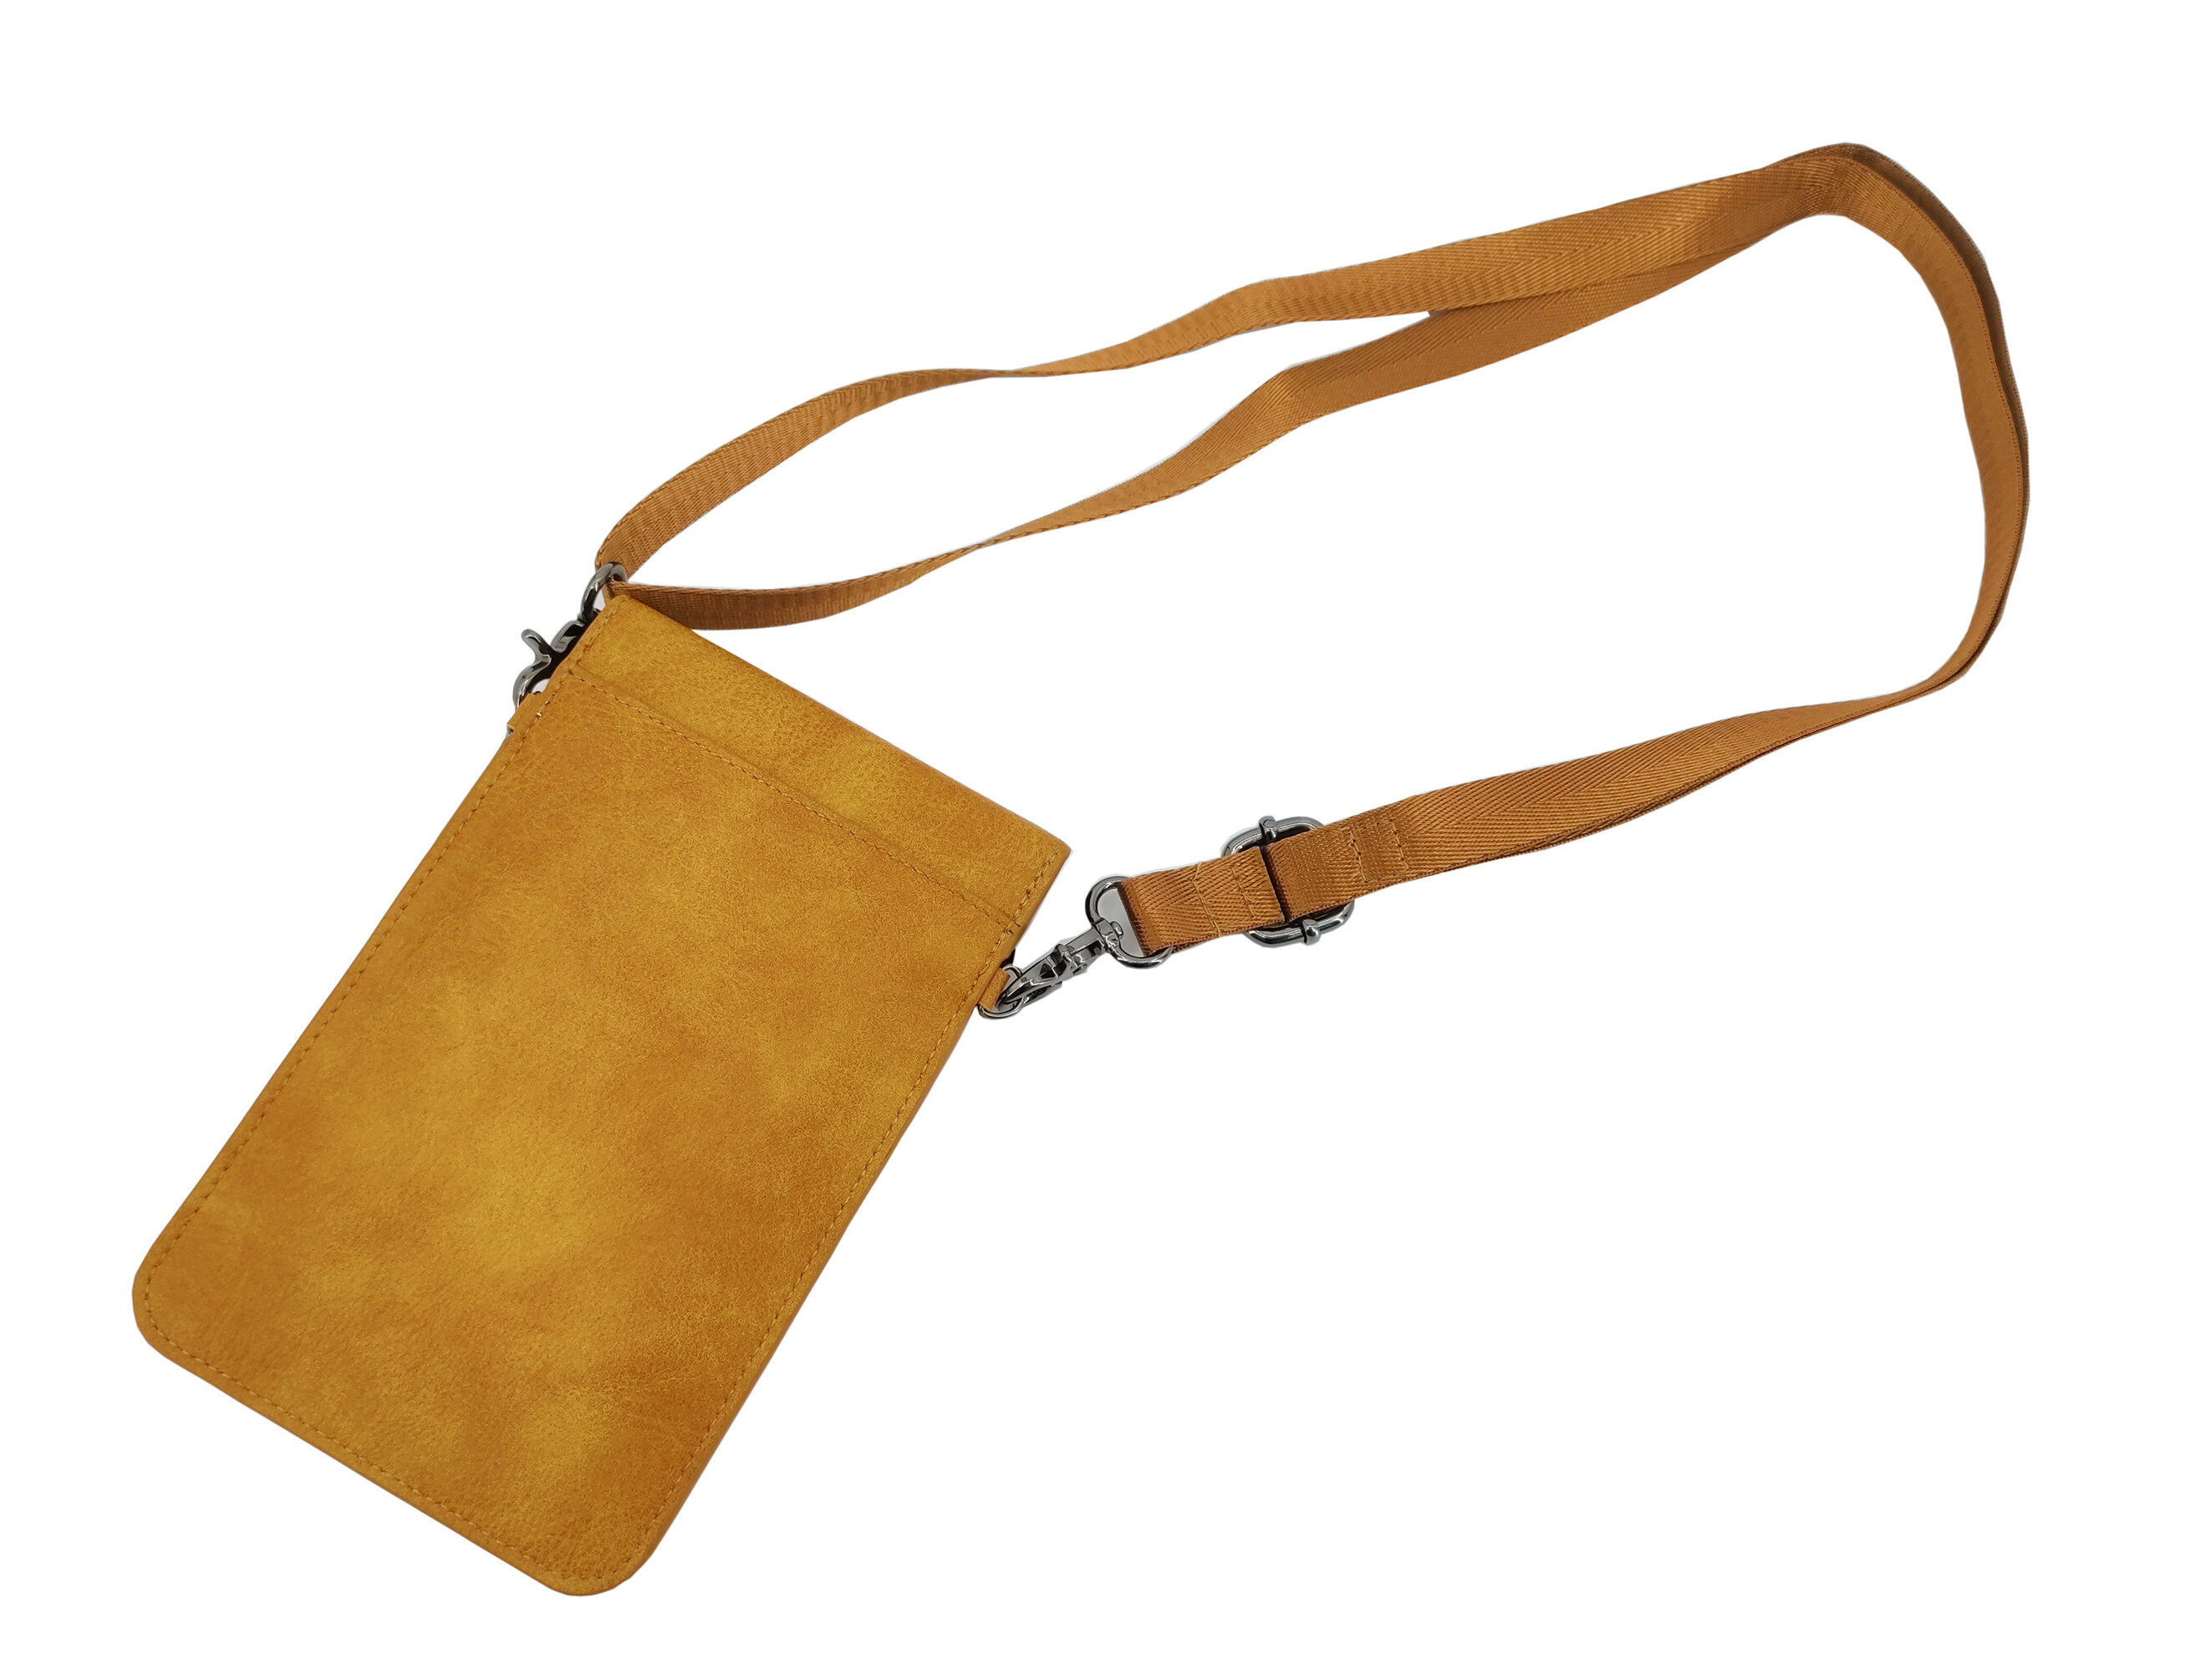 1Pair Leather Purse Strap Sewing Canvas Replacement Handbag Shoulder  Bag,Camel - Walmart.com